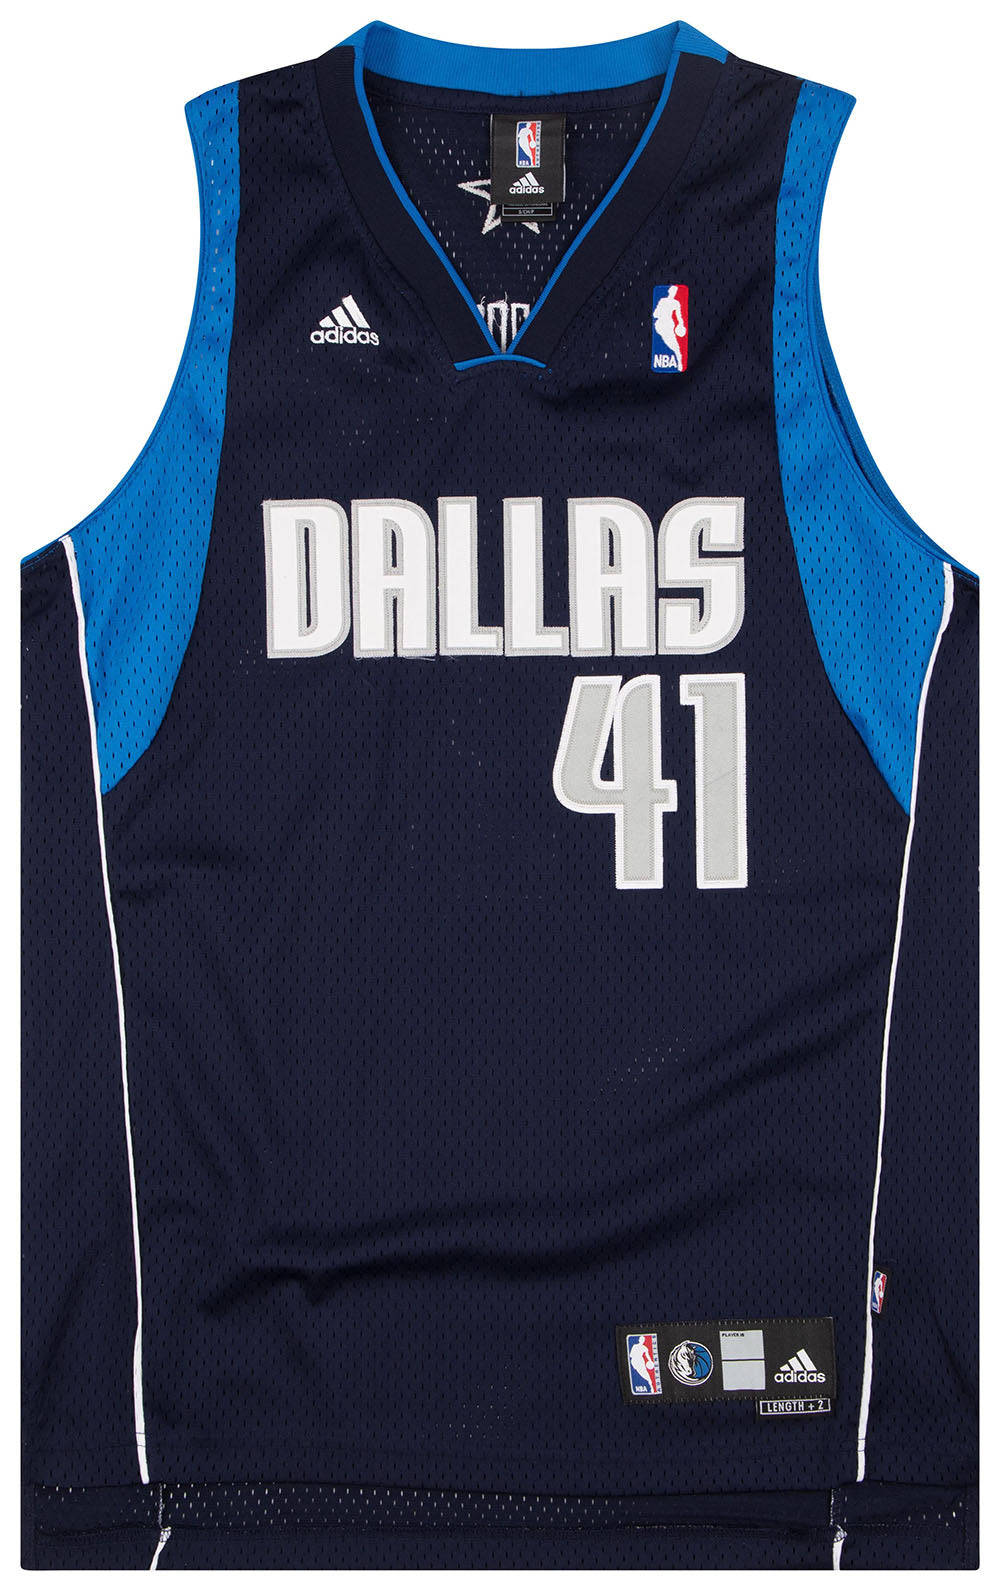 Dirk Nowitzki Dallas Mavericks adidas Replica Alternate Jersey